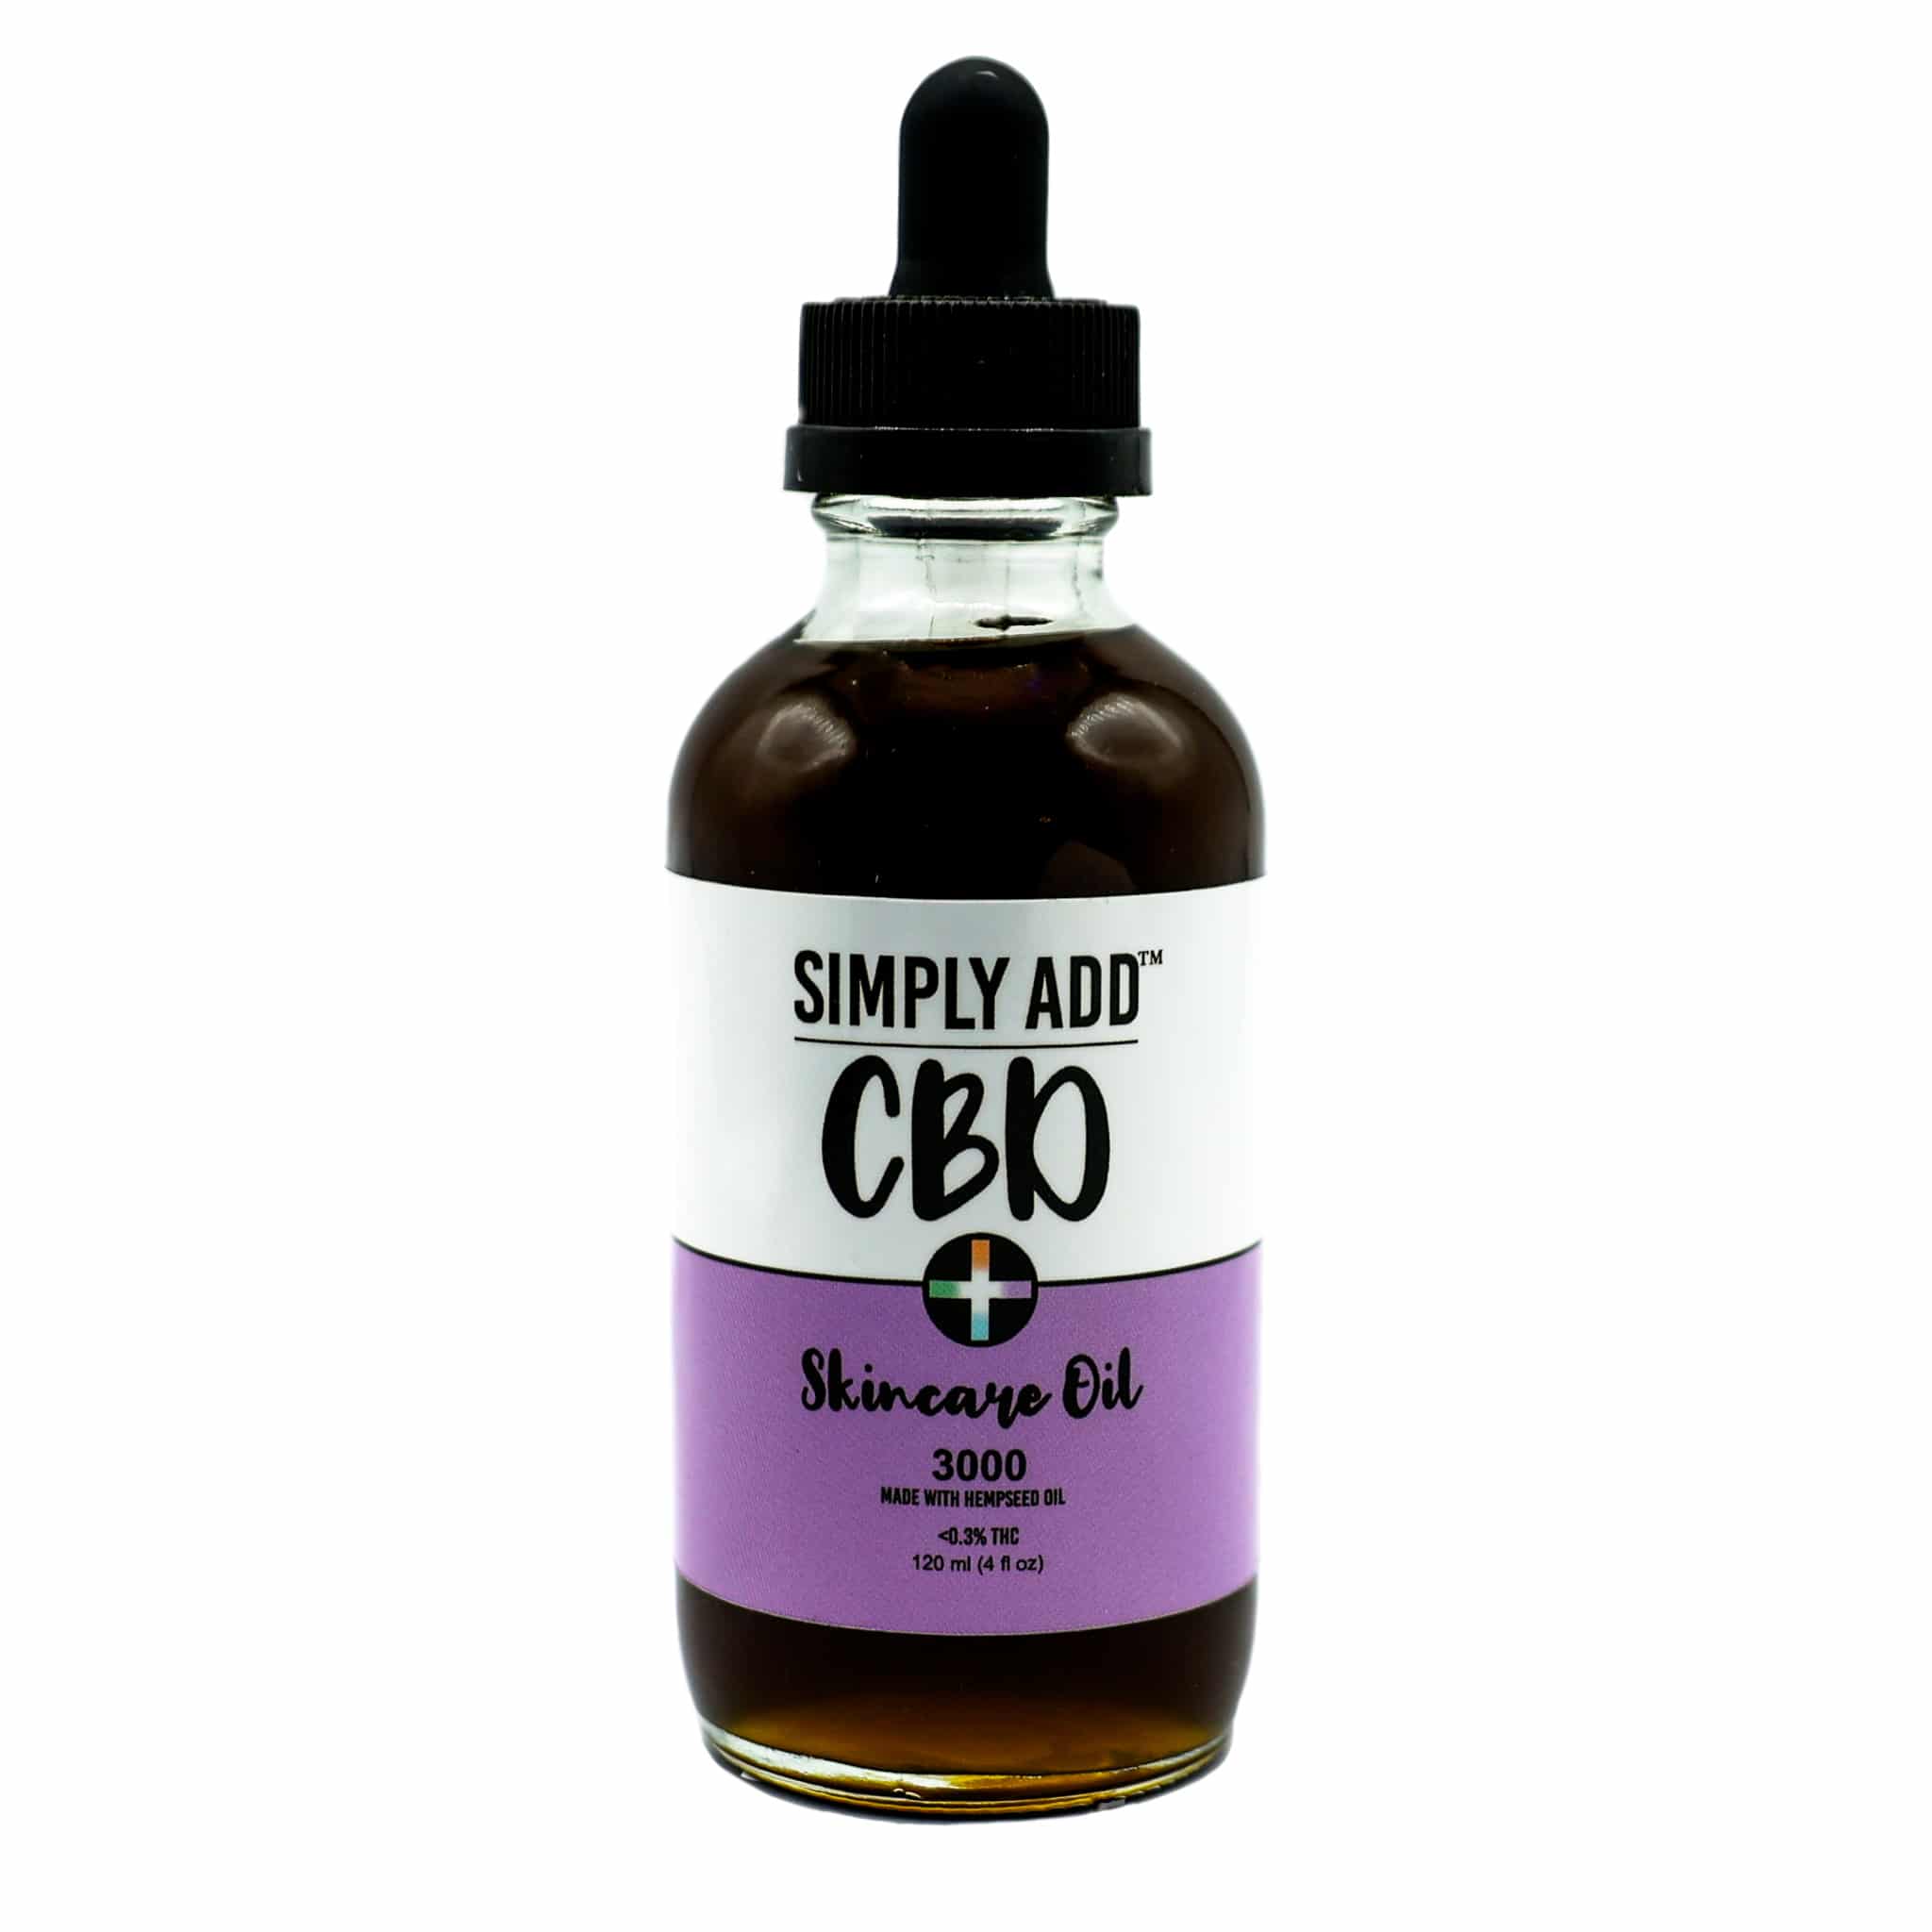 Simply Add CBD Oil for Skincare - Solventless CBD Oil